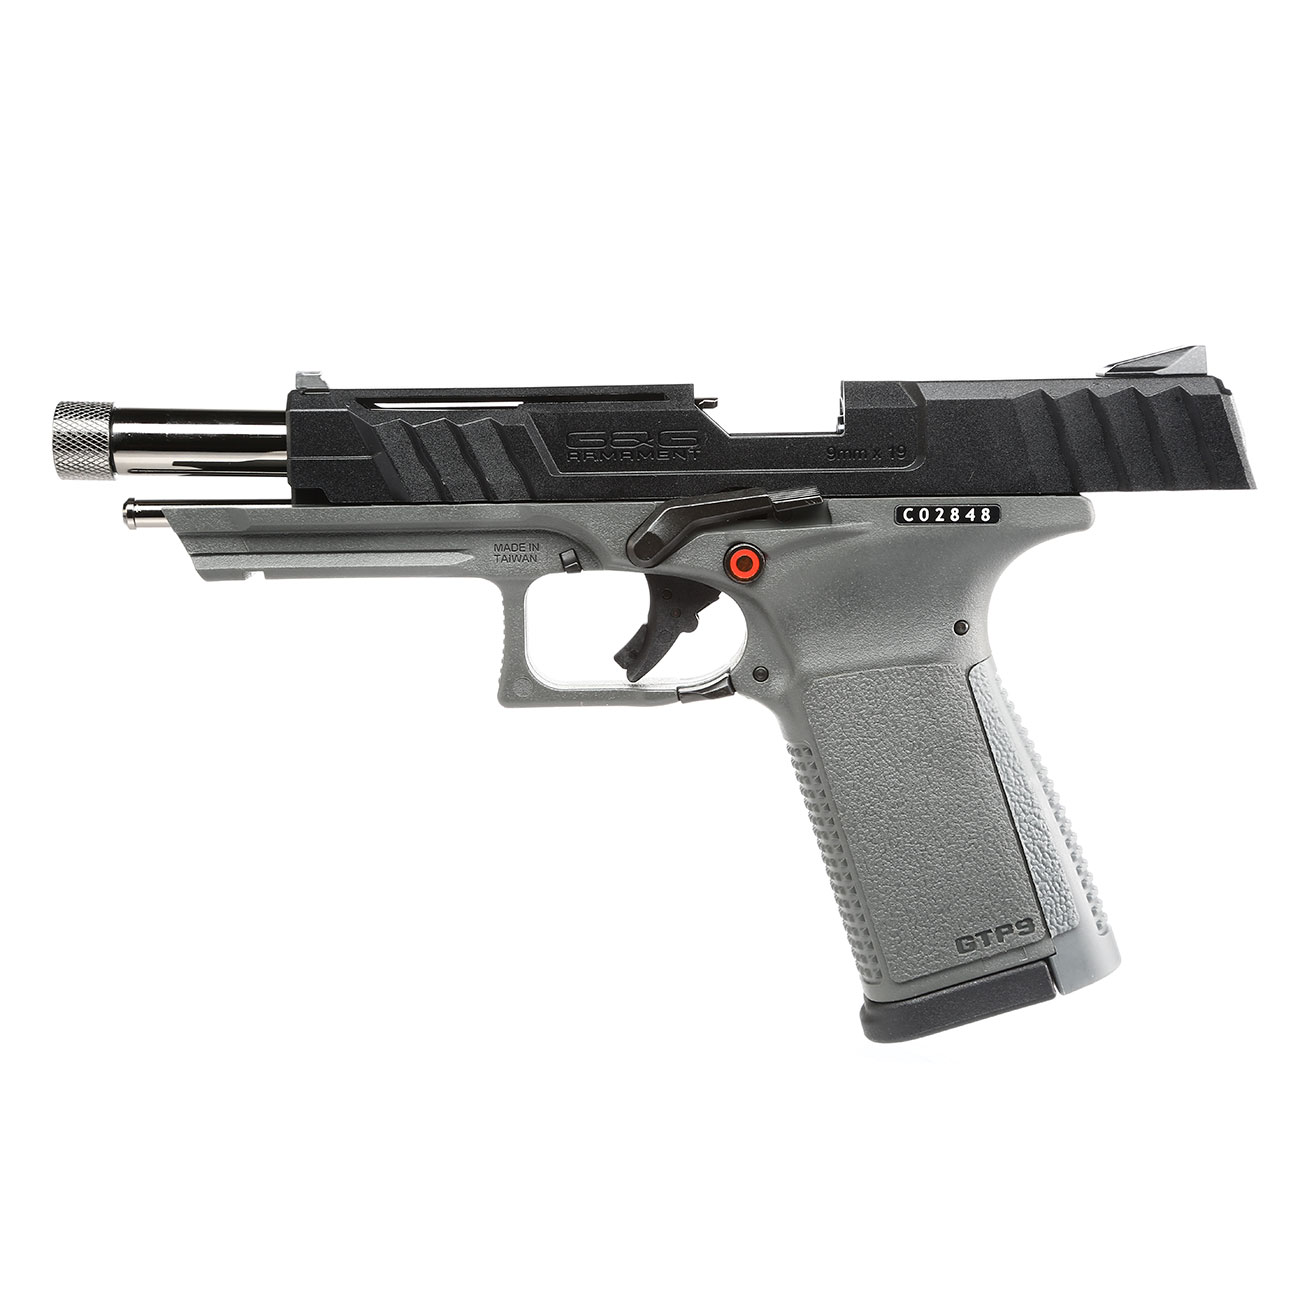 G&G GTP9 Polymer GBB 6mm BB grau / schwarz inkl. Pistolenkoffer Bild 2